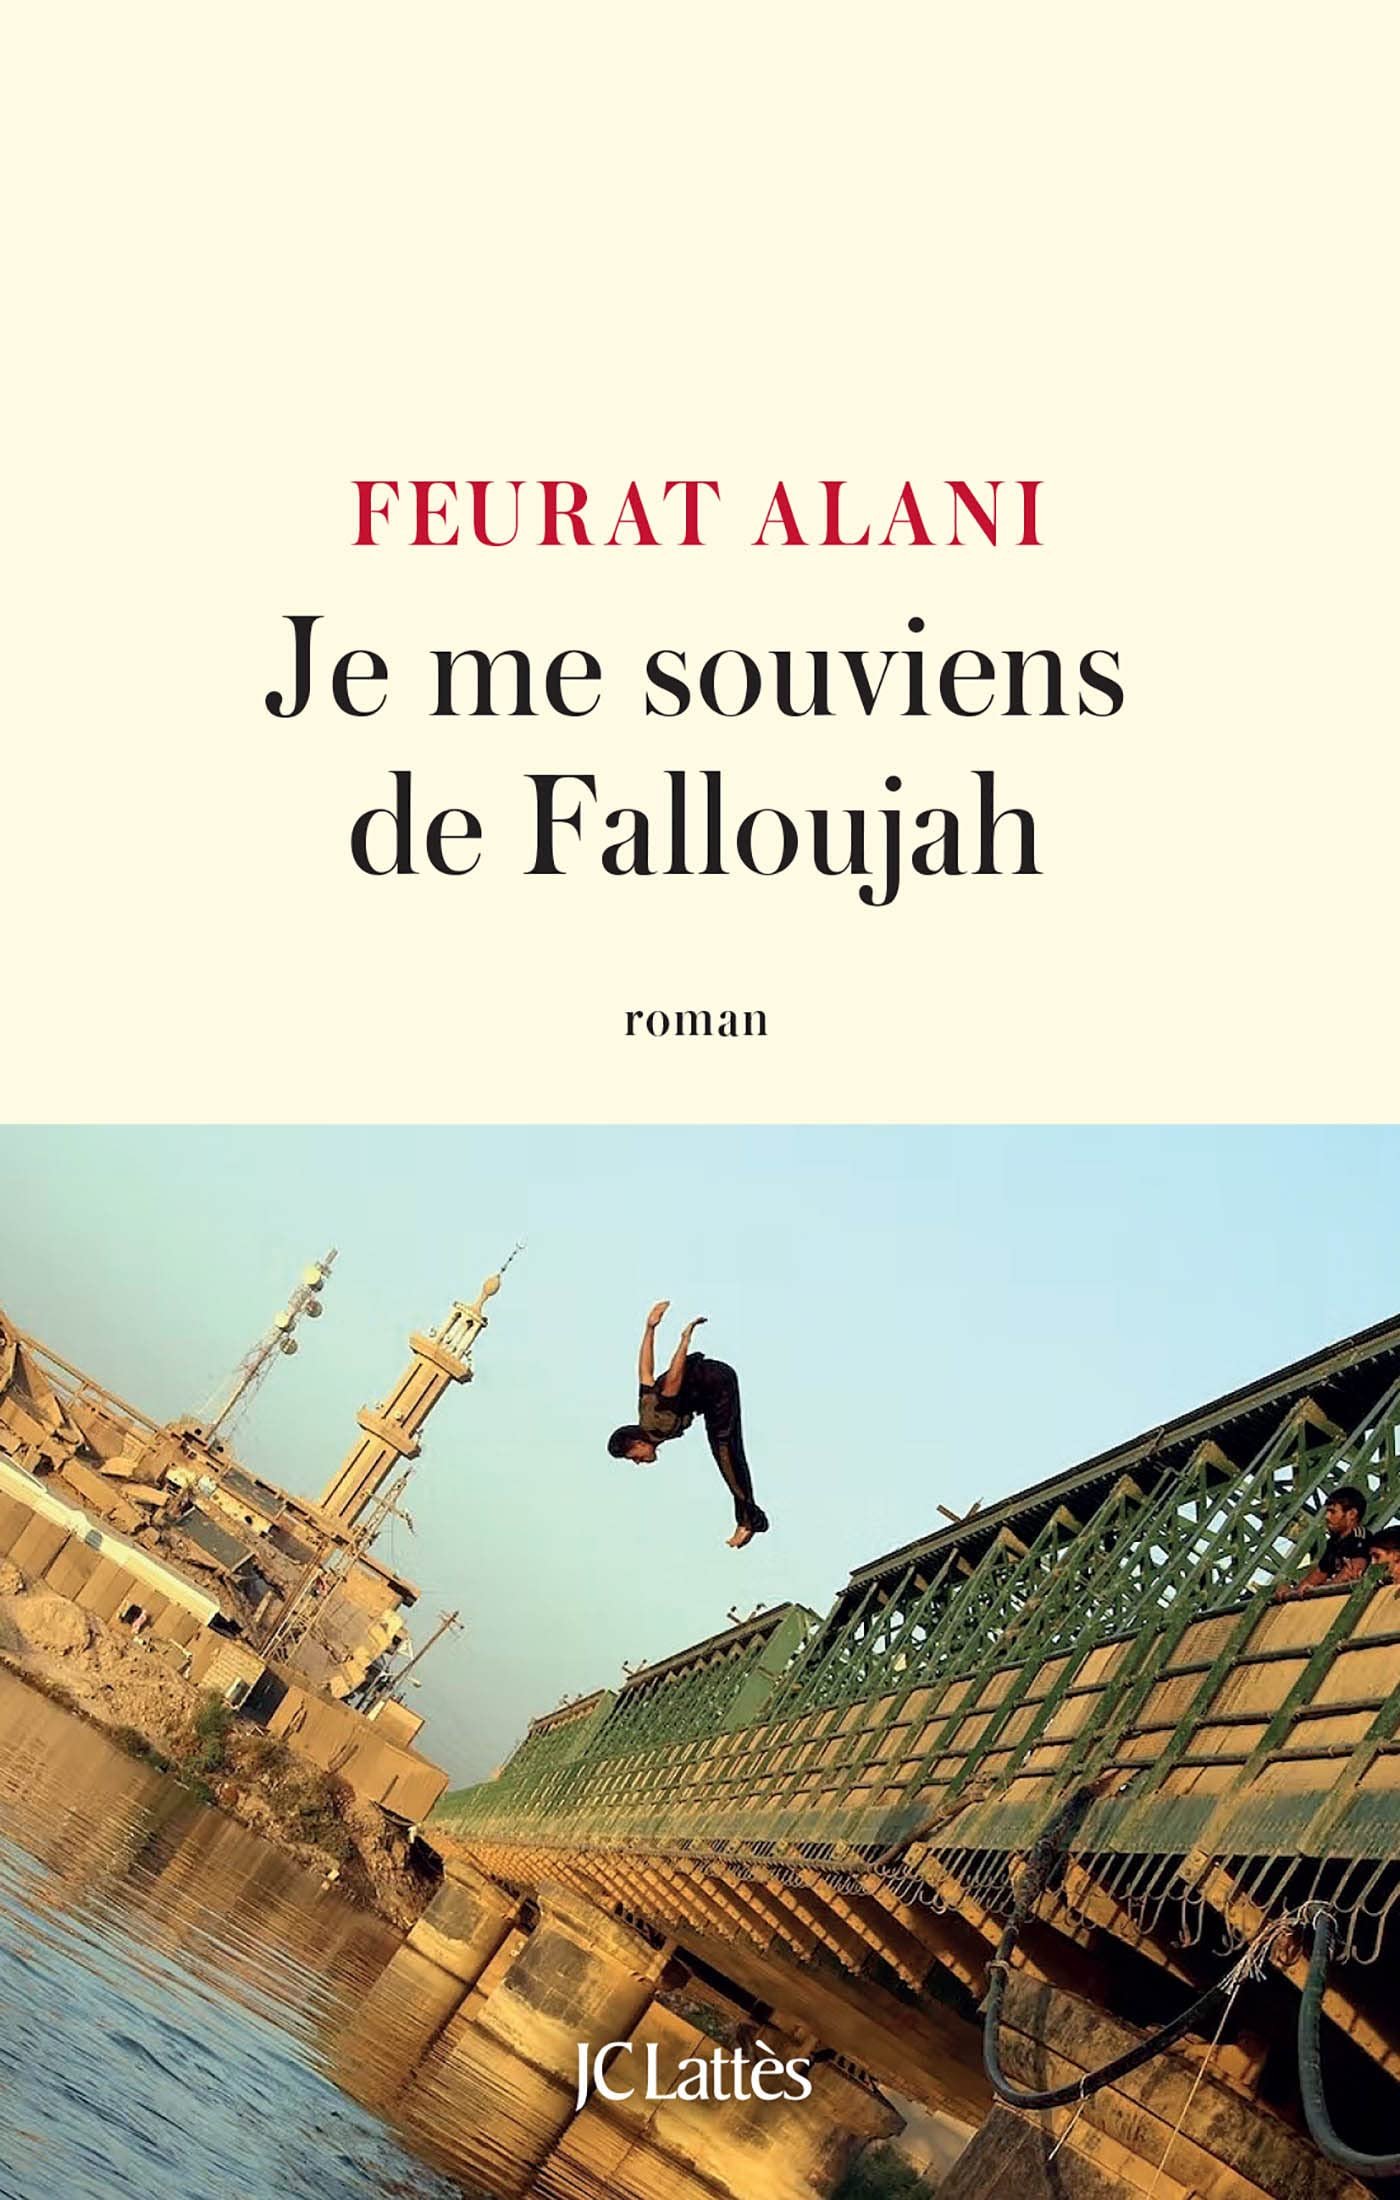 Feurat Alani – Je me souviens de Falloujah